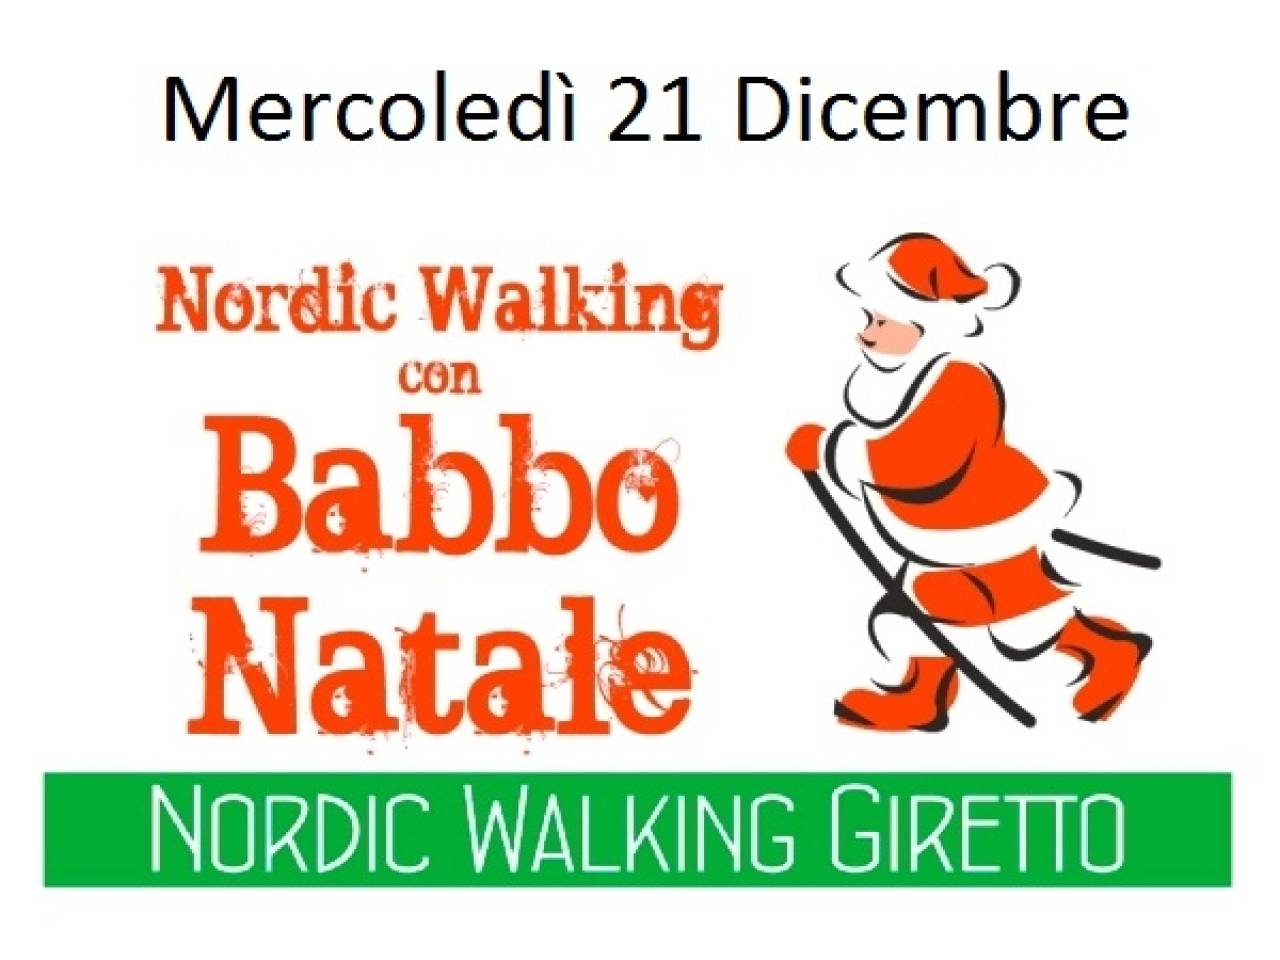 Nordic Walking con Babbo Natale - 2016